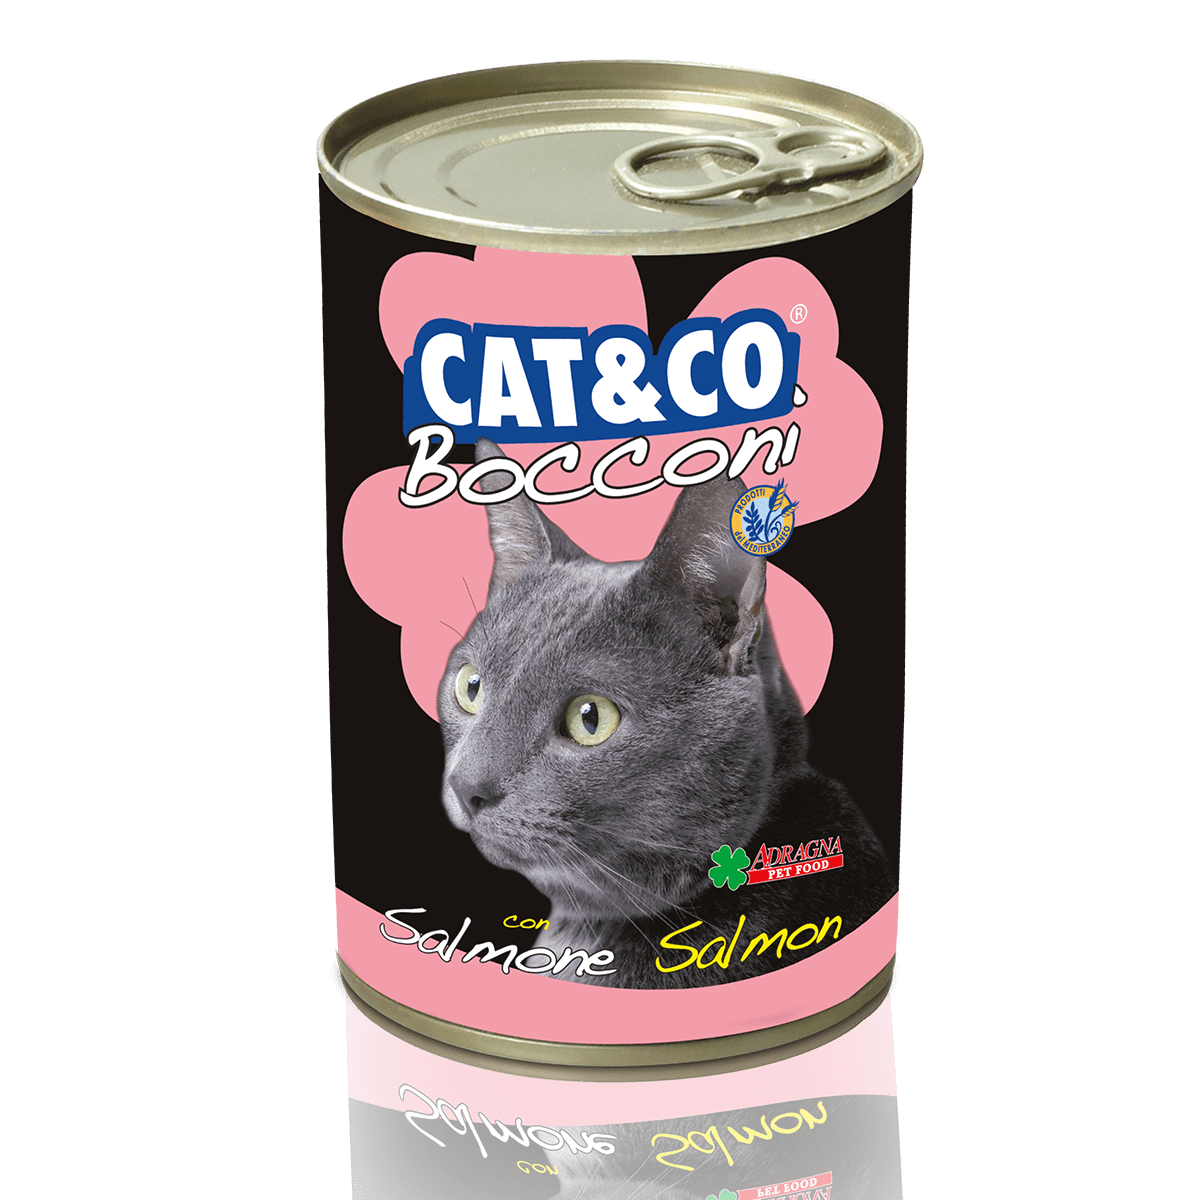 Cat&Co Bocconi Salmone